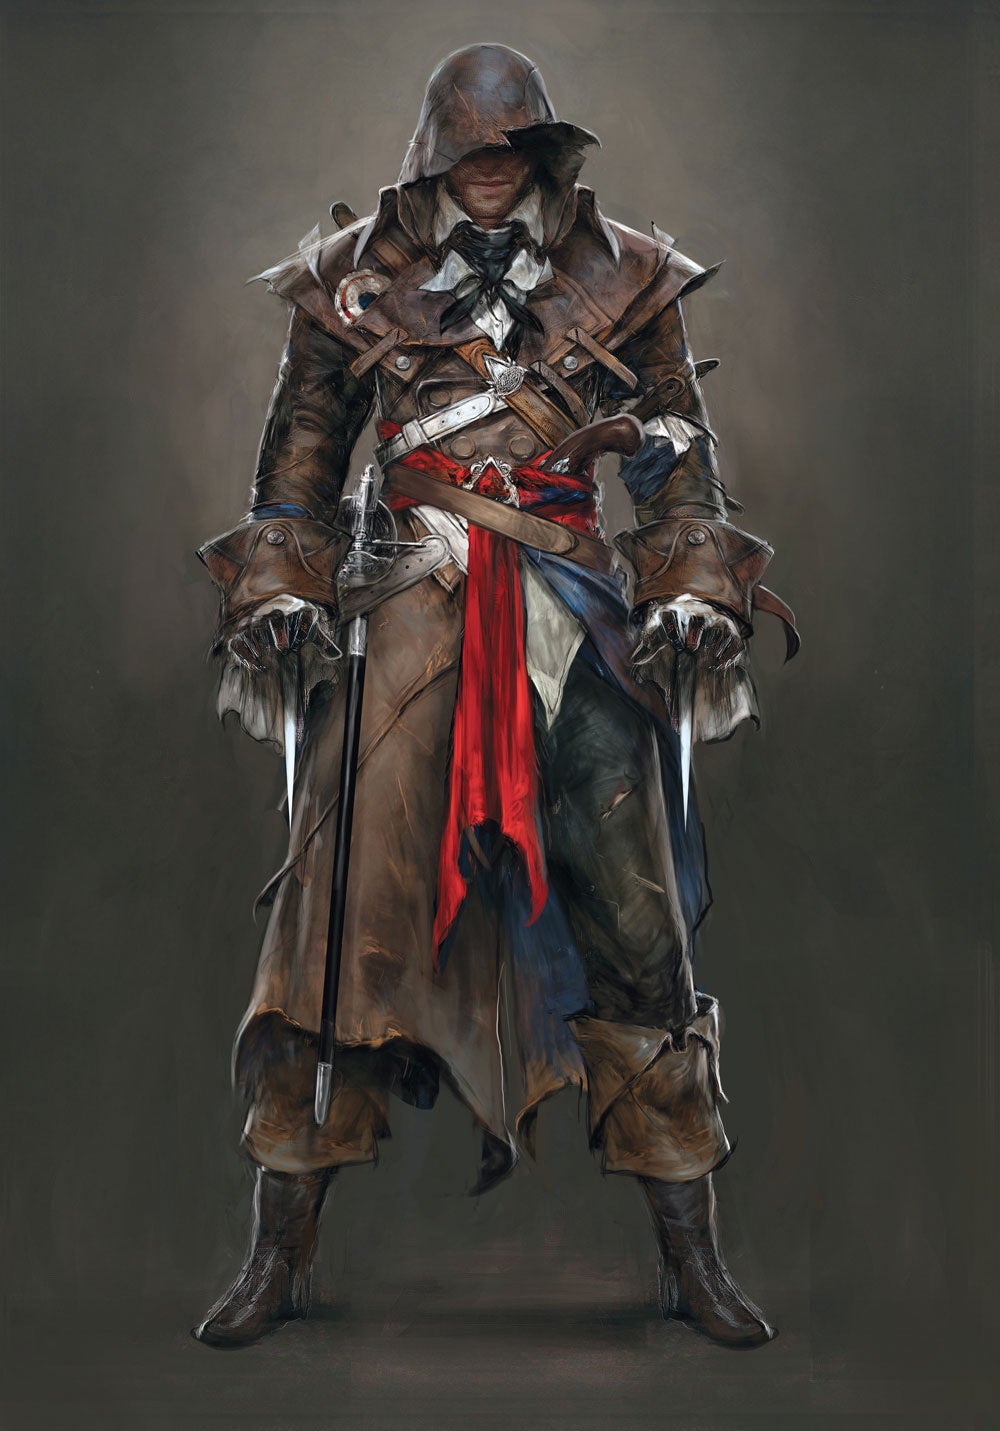 Fine Art: The Art Of Assassin's Creed Unity